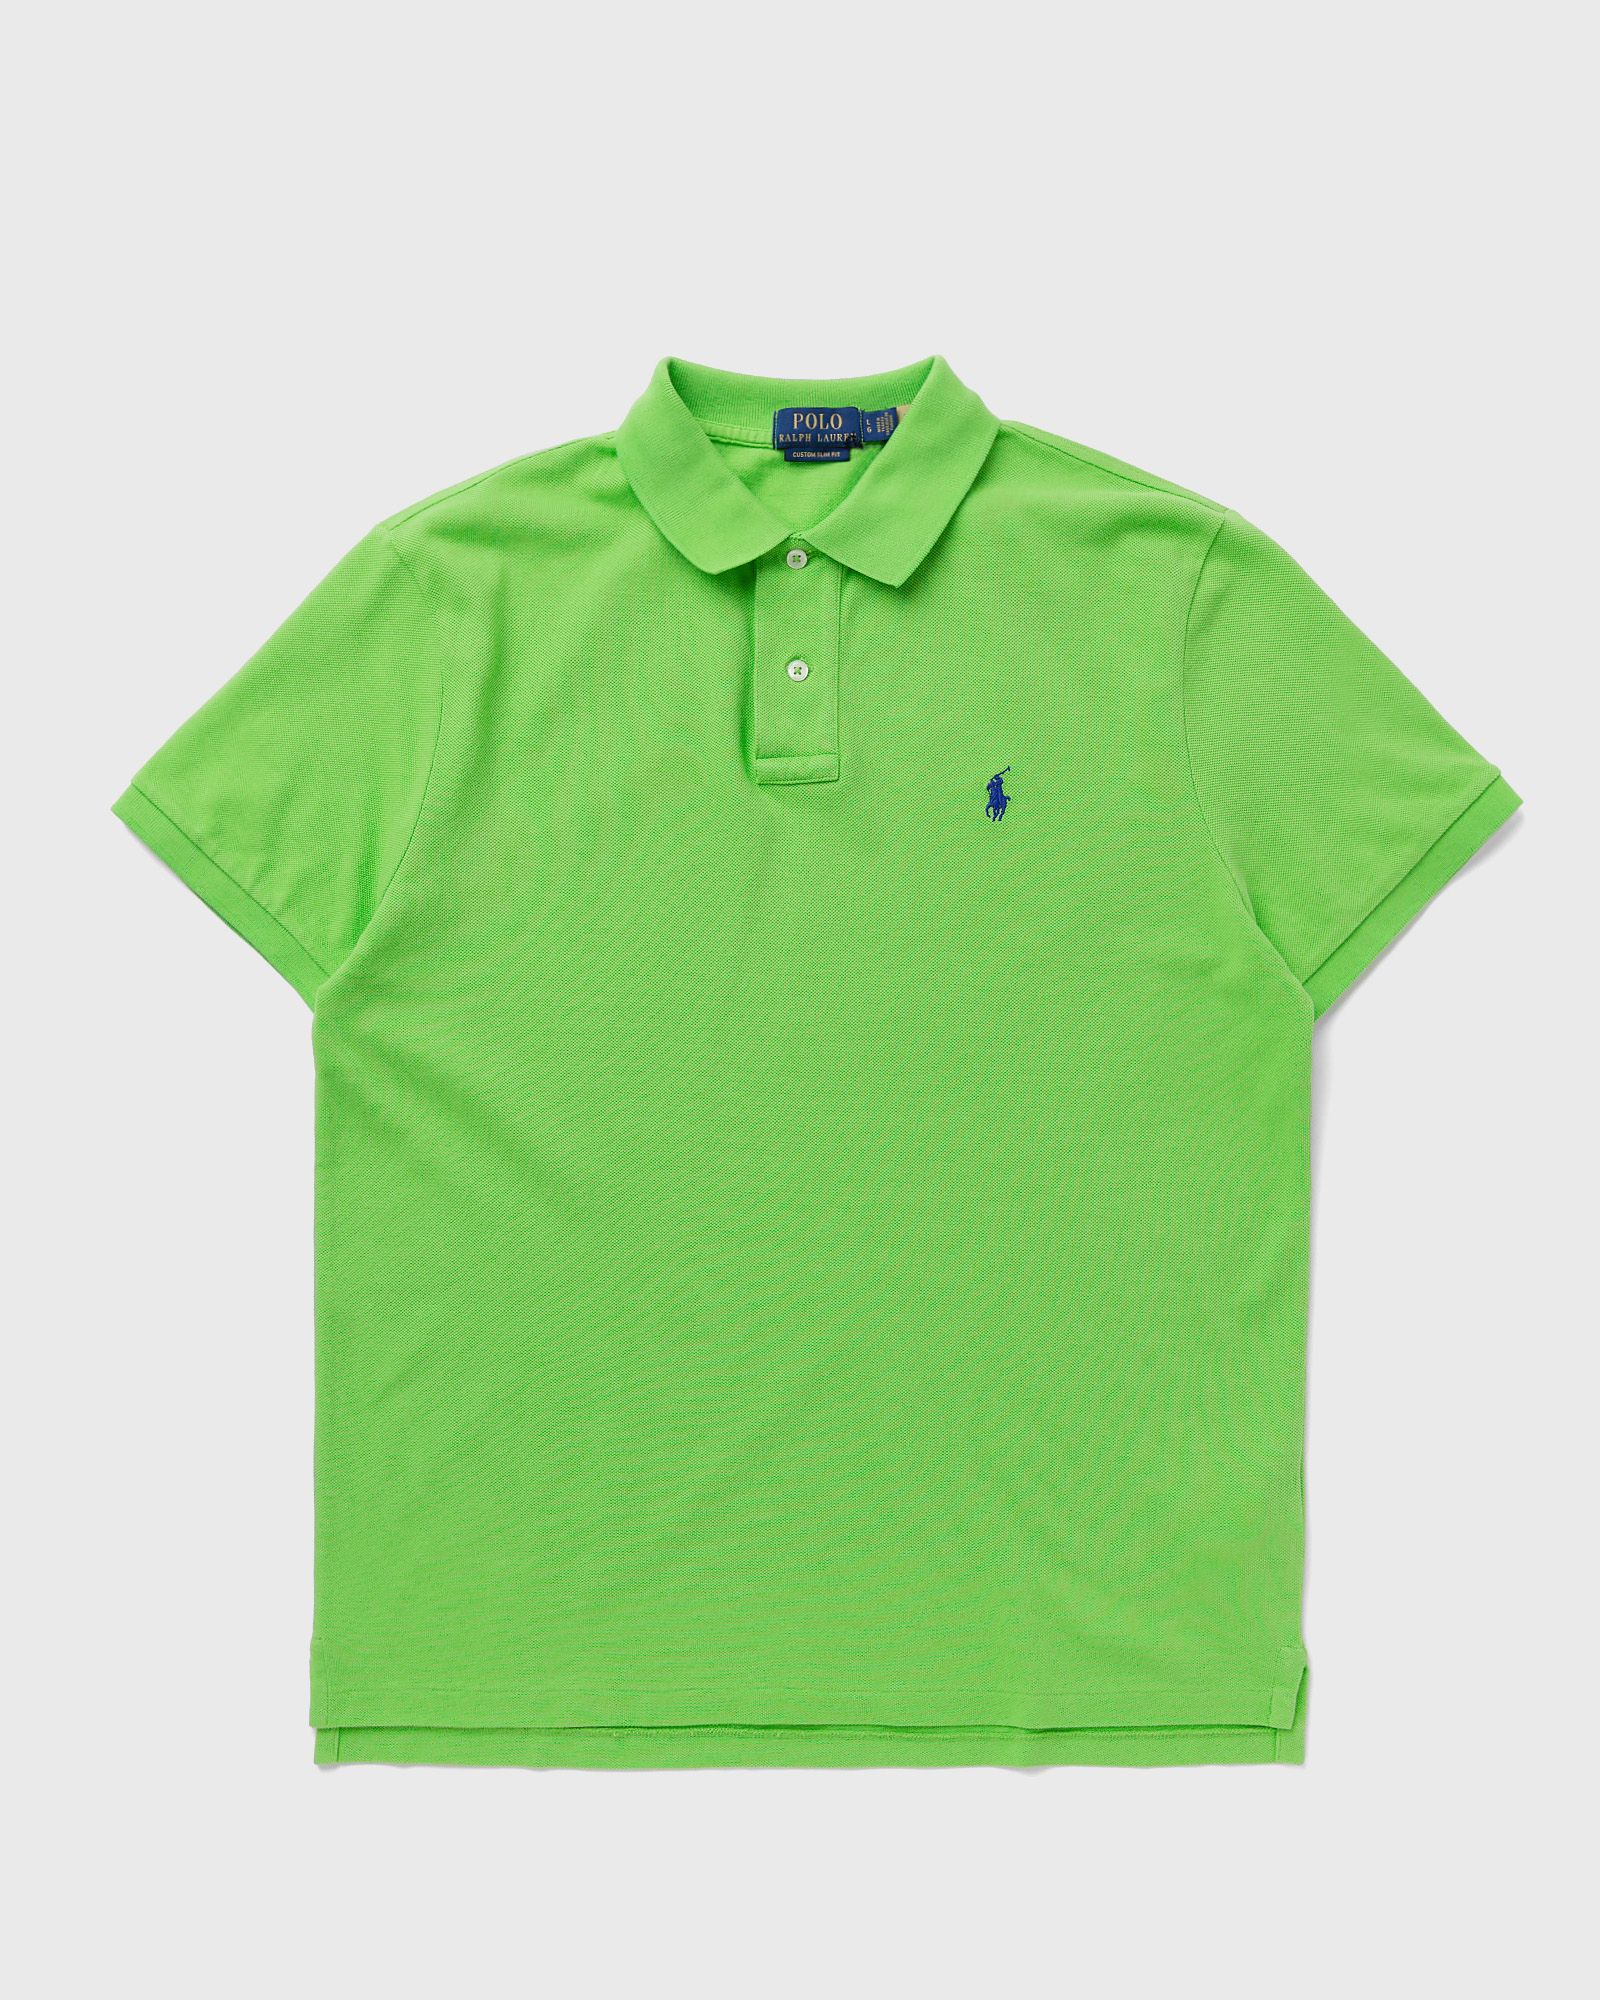 Polo Ralph Lauren - sskccmslm1-s/s polo shirt men polos green in größe:s